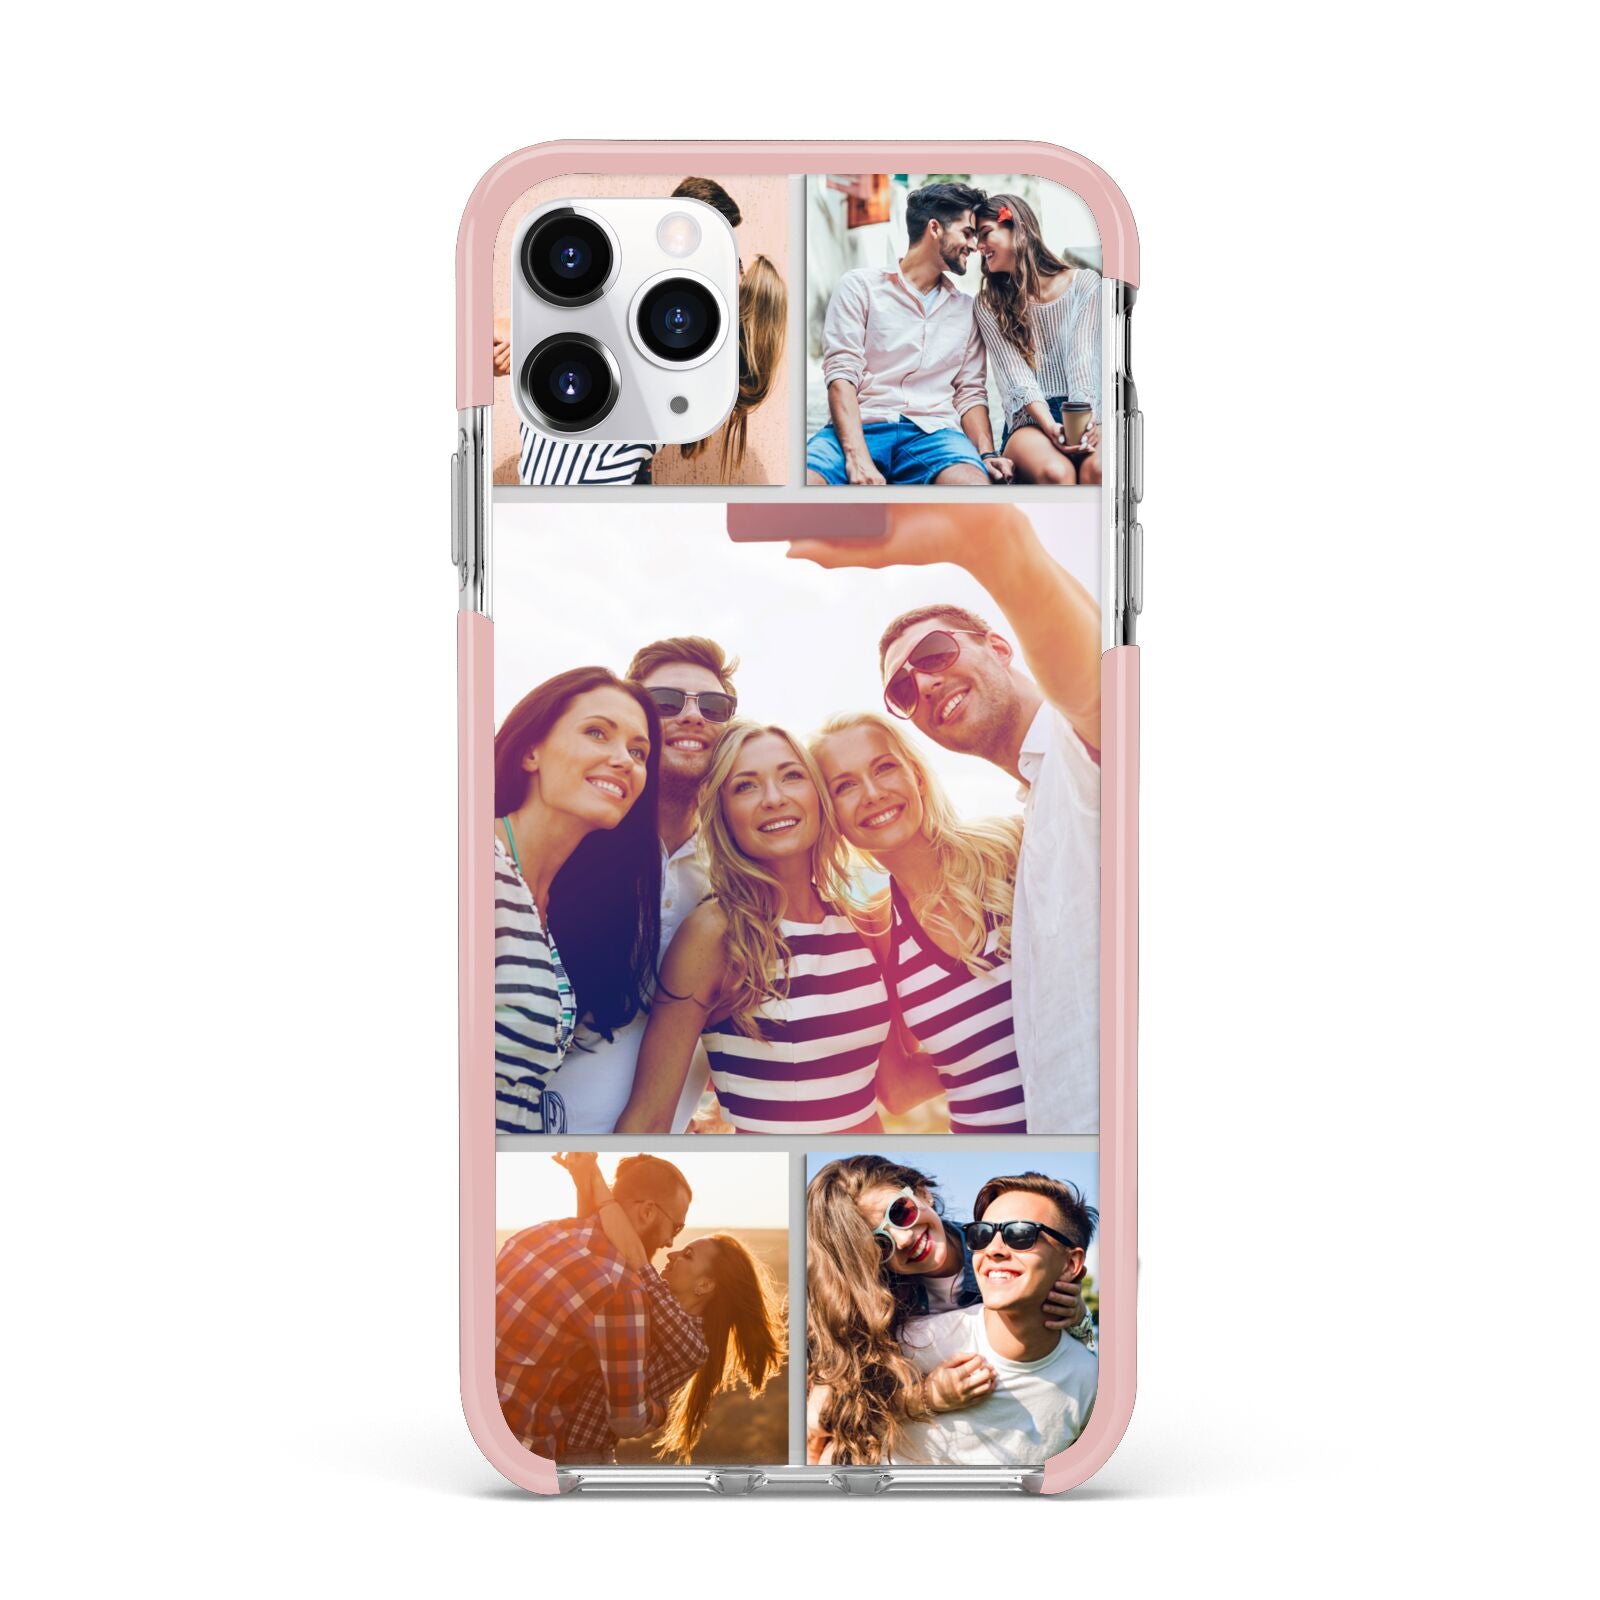 Tile Photo Collage Upload iPhone 11 Pro Max Impact Pink Edge Case